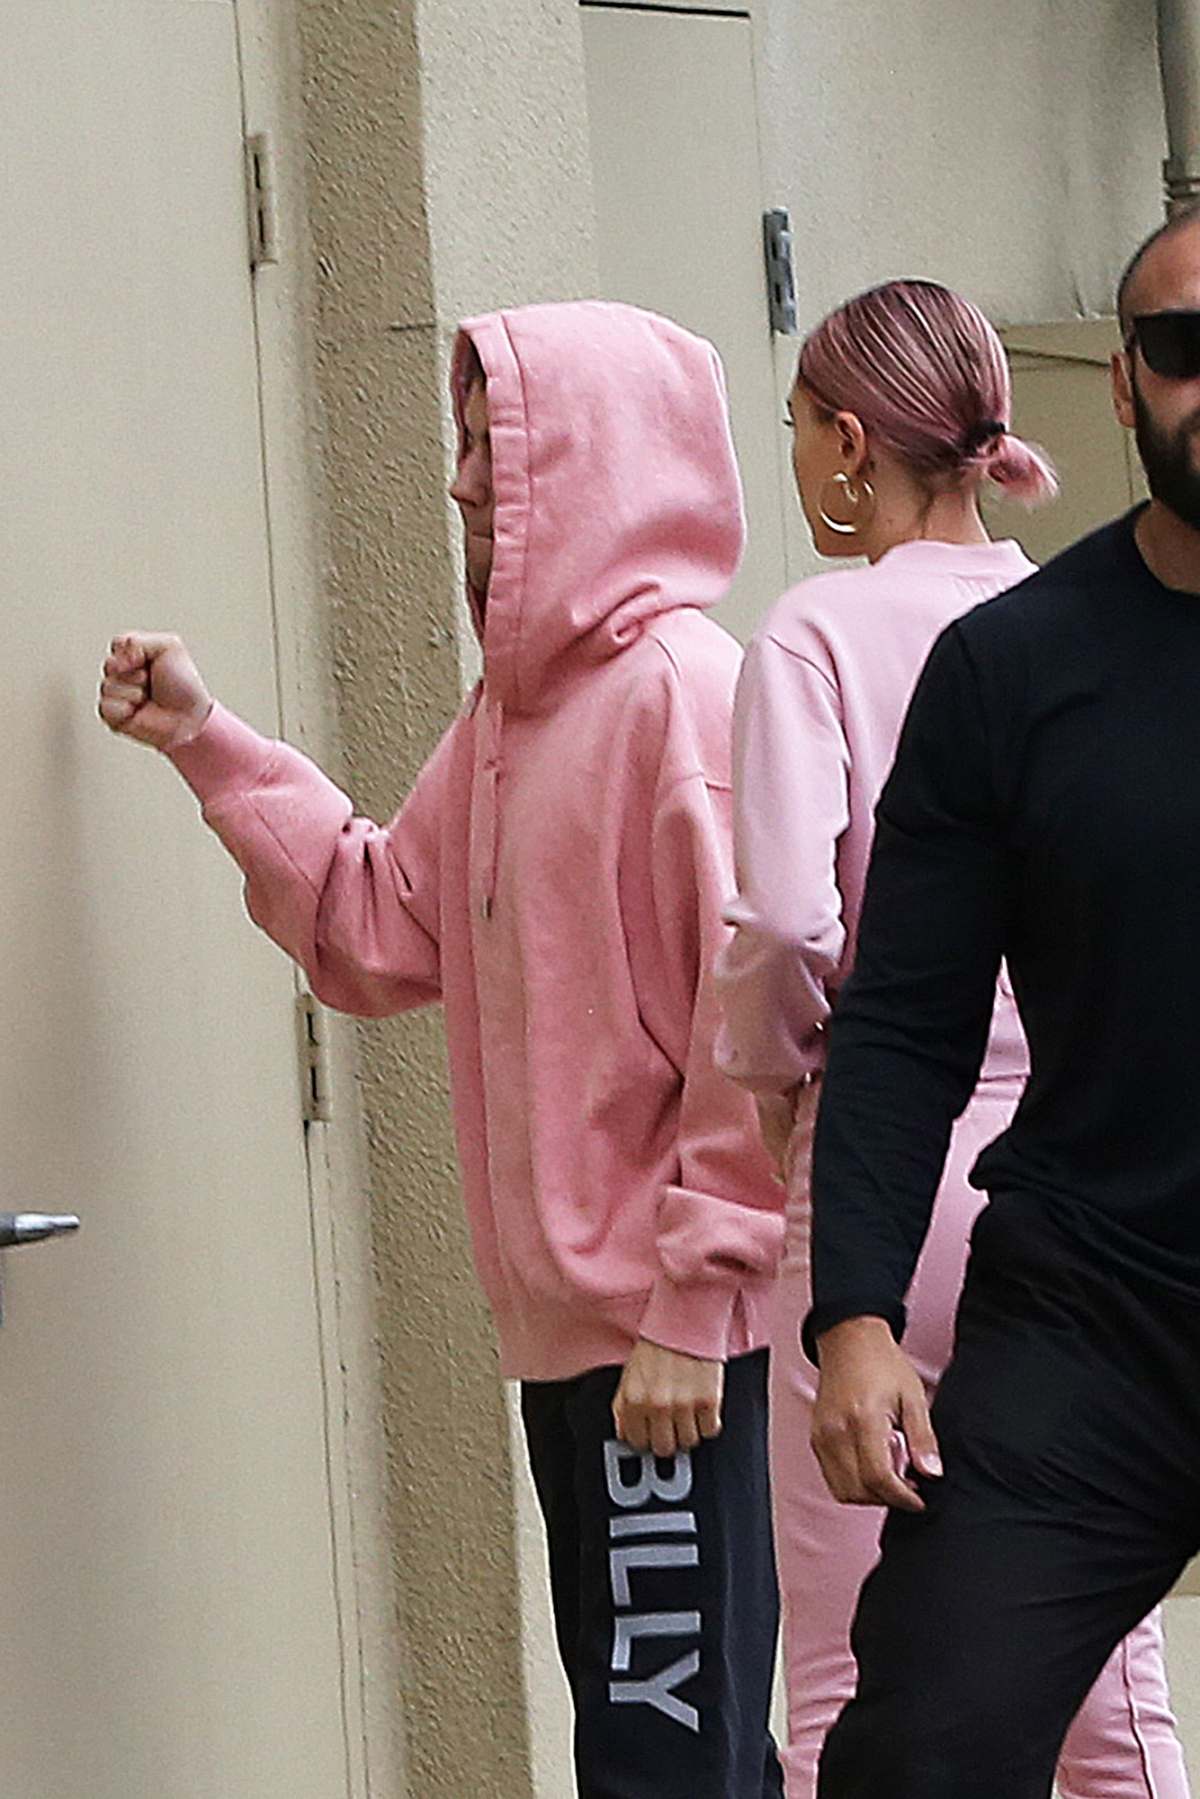 Hailey Baldwin Floral Pajamas With Justin Bieber in Miami